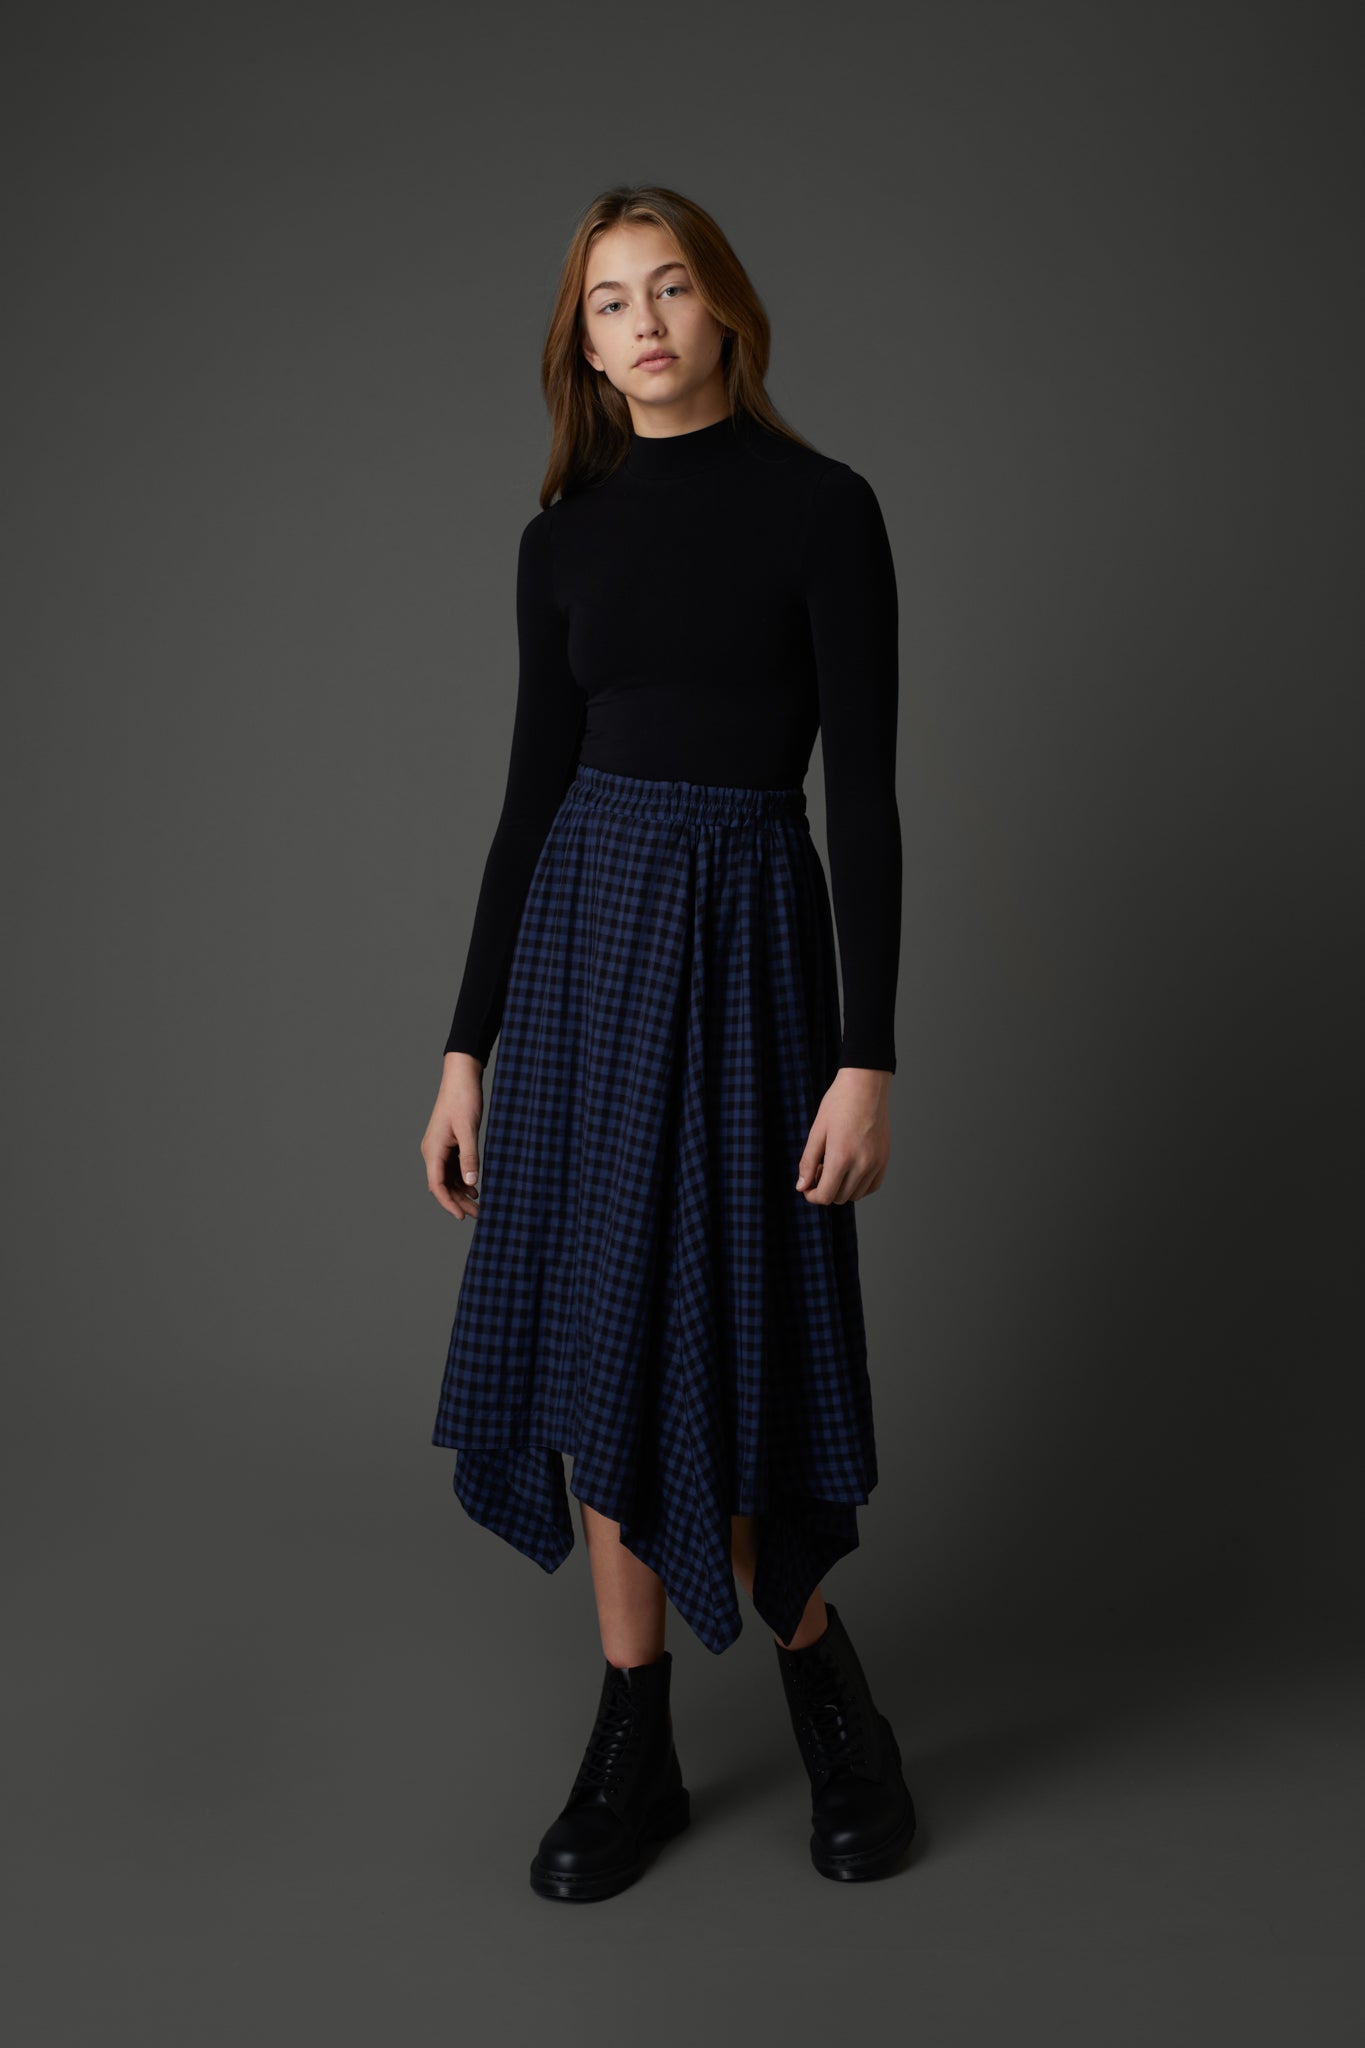 Kerchief Skirt in Blue Plaid #8106